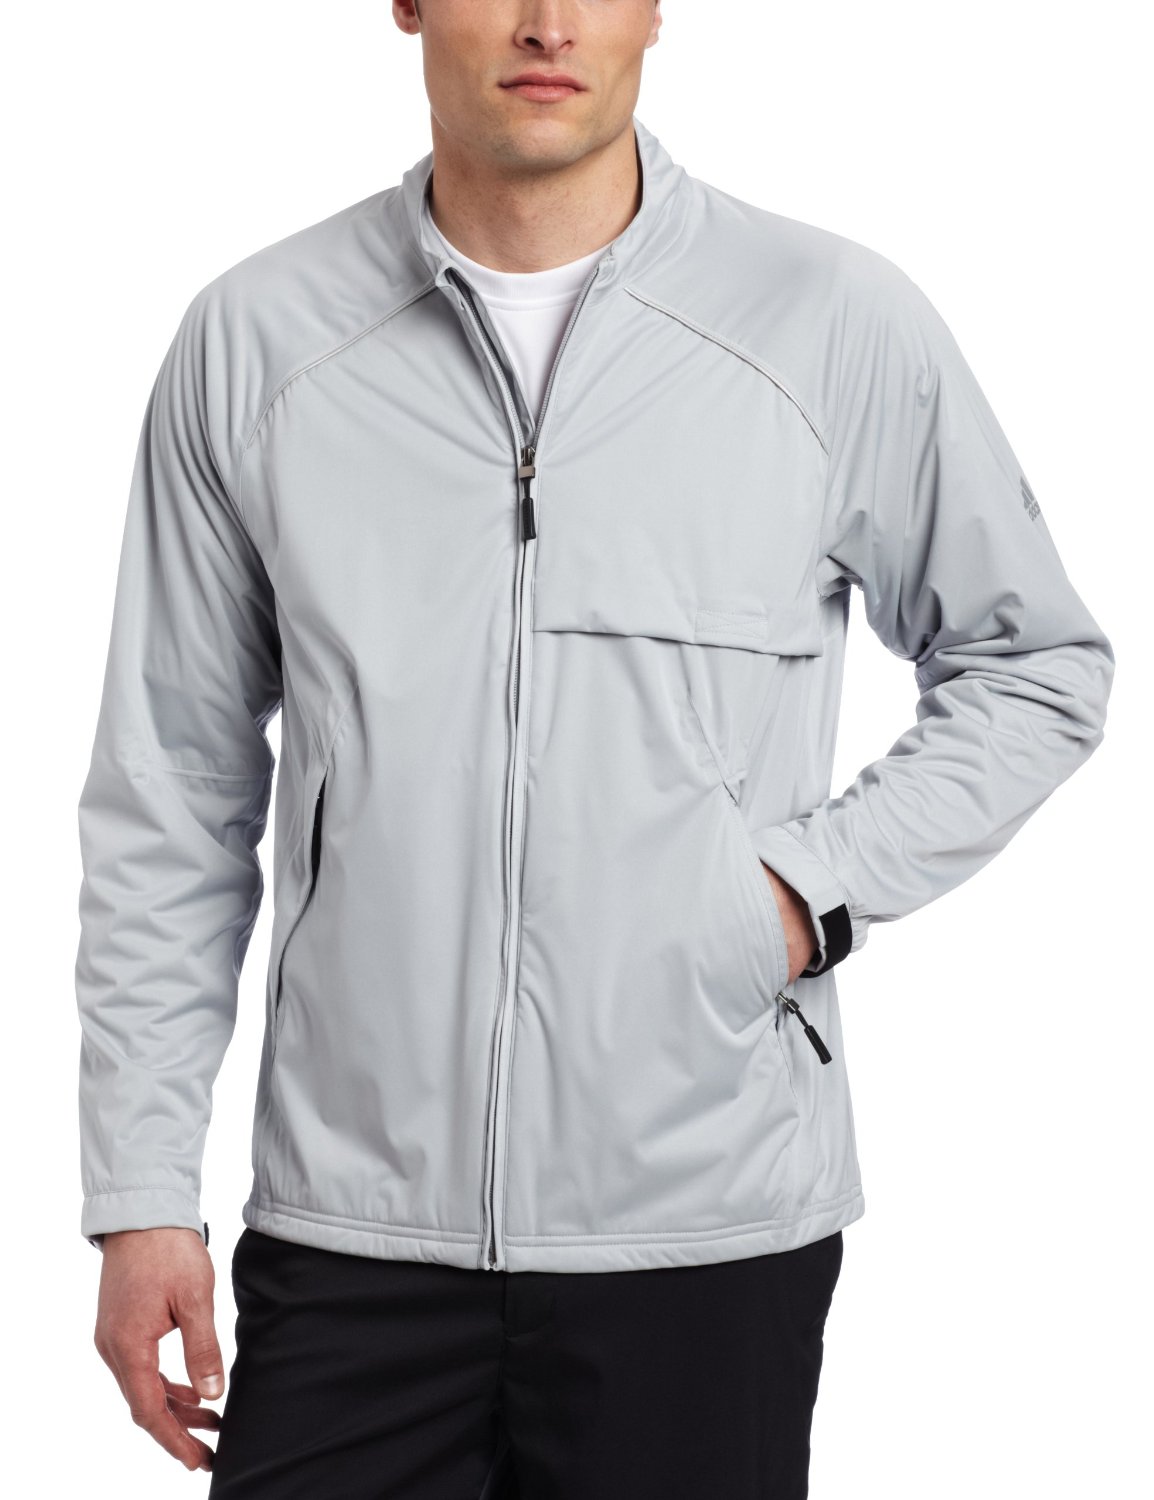 Adidas Mens ClimaProof Storm Soft Shell Golf Jackets